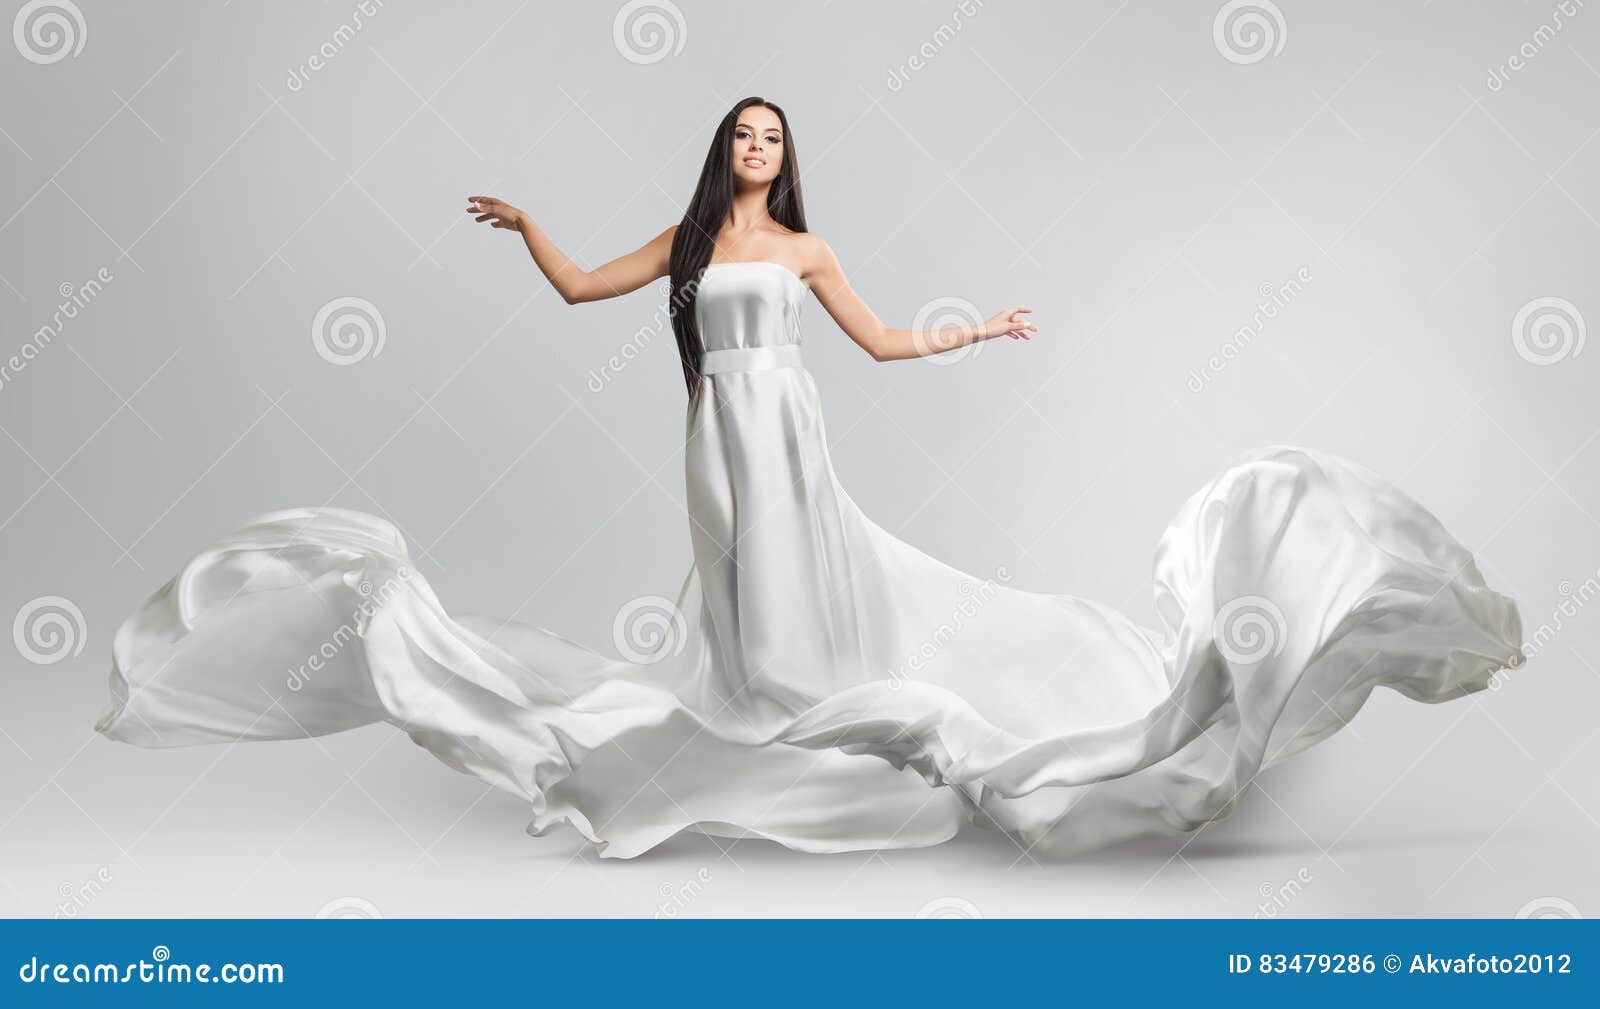 long flowing white dress